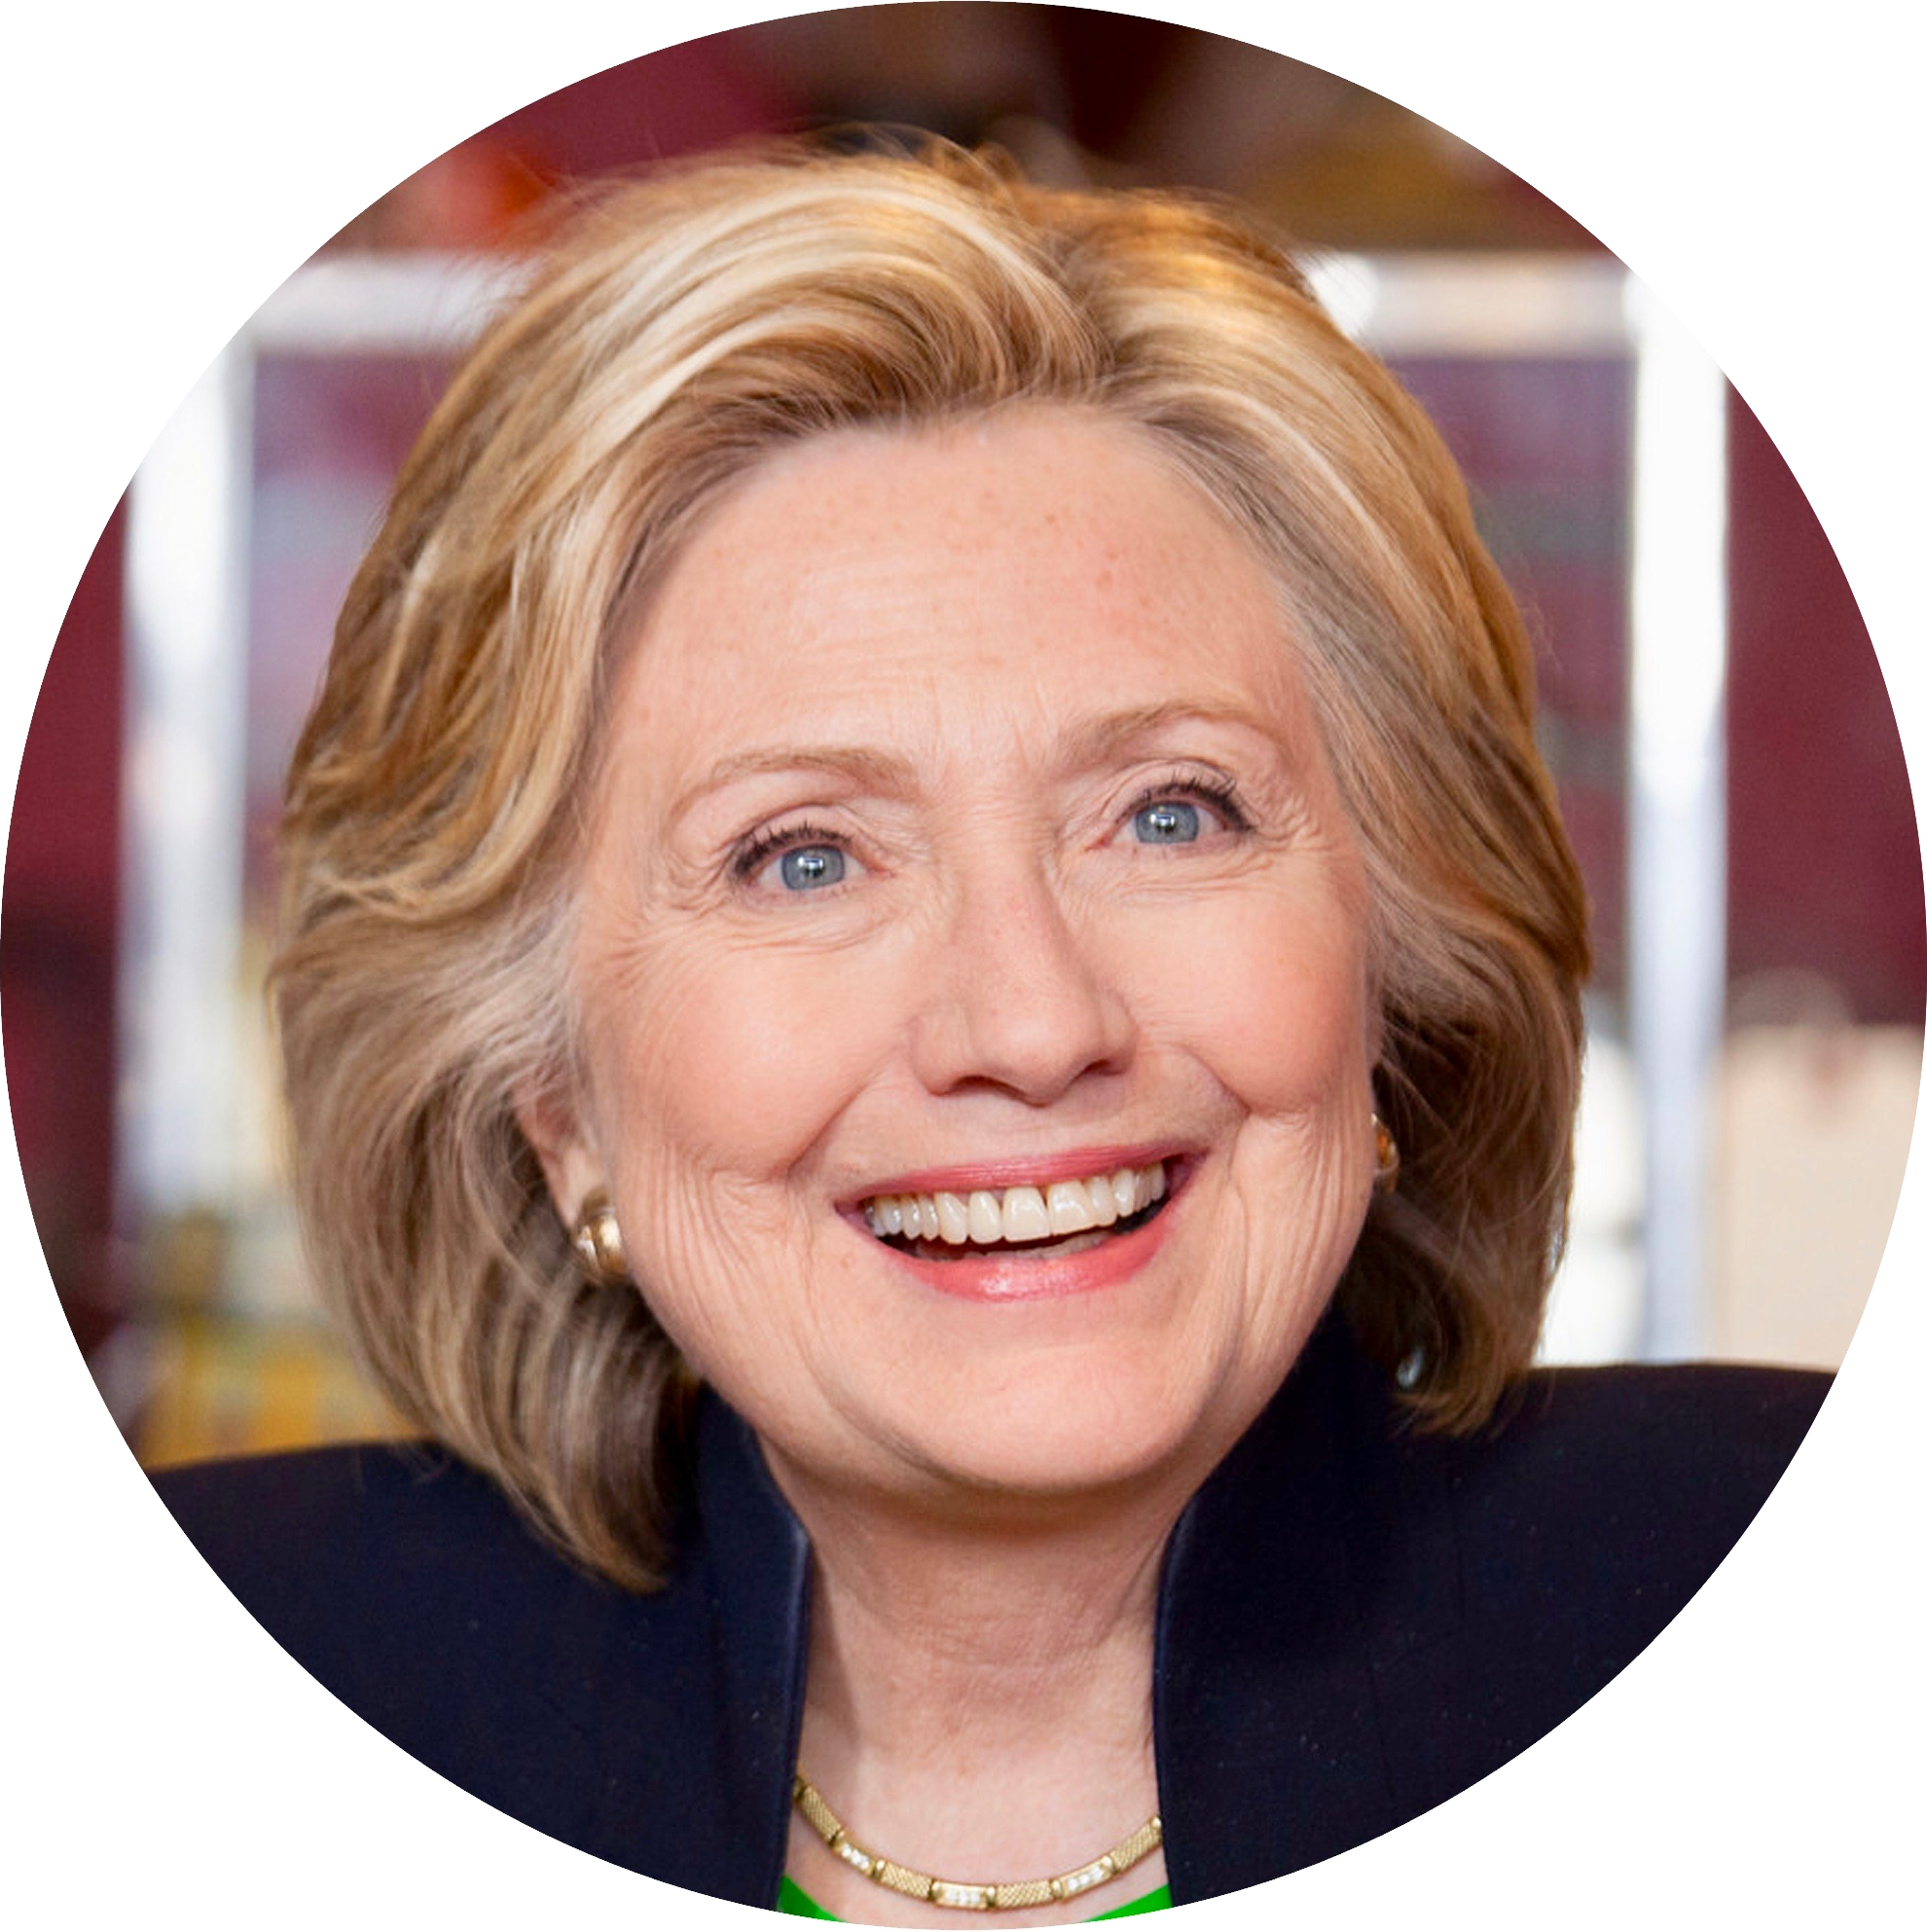 Hillary Clinton Transparent Image